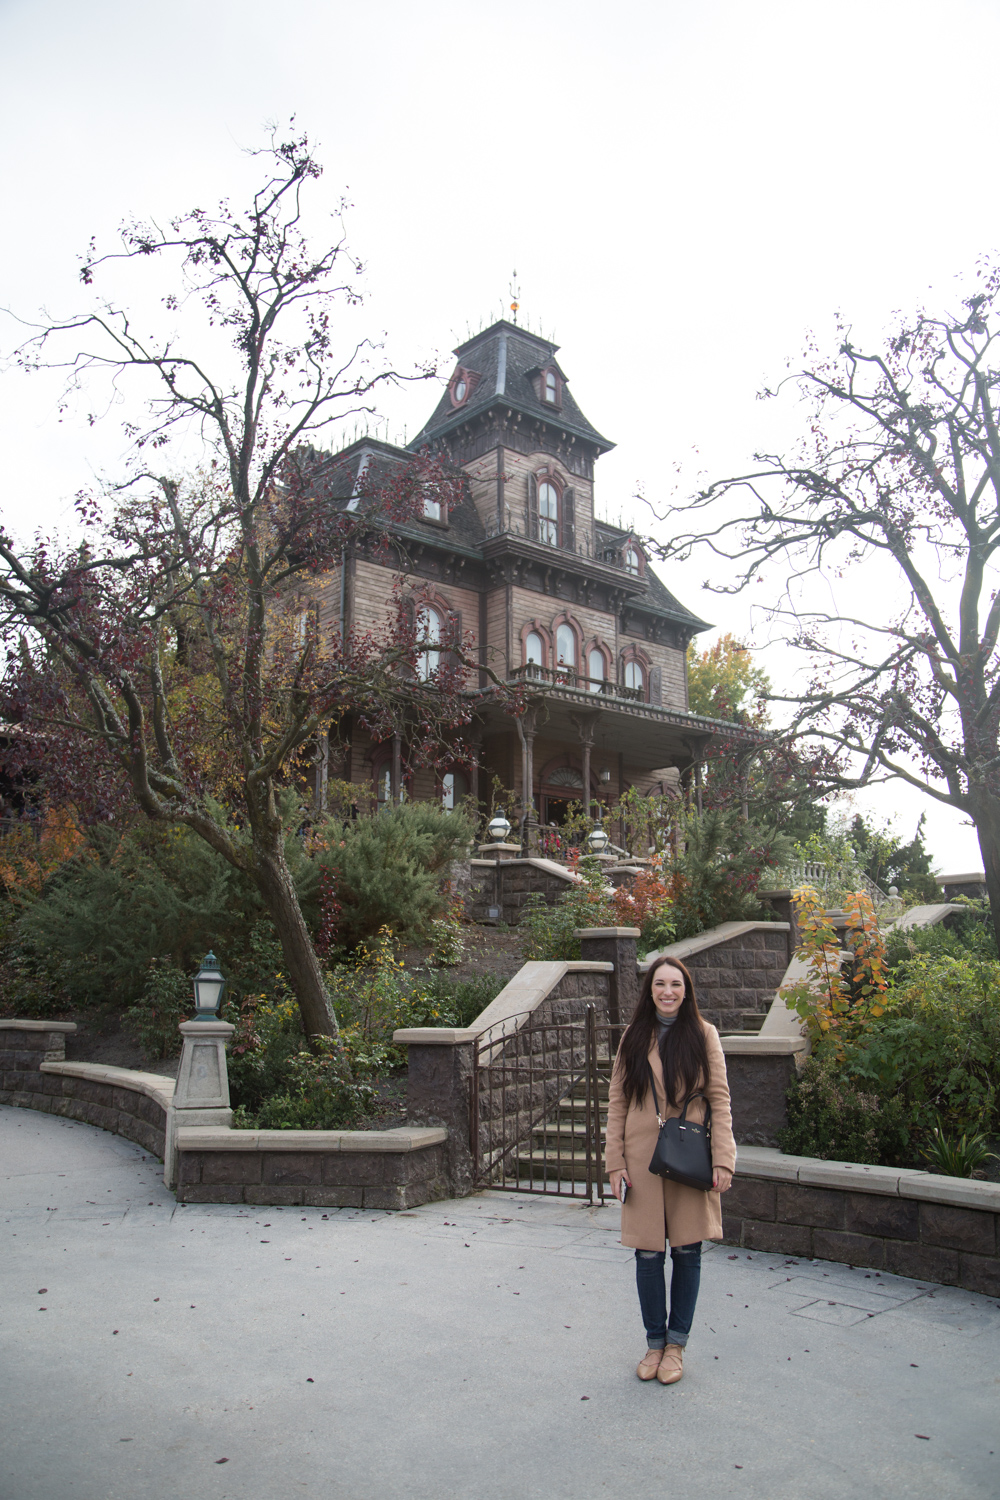 Haunted Mansion at Disneyland Paris